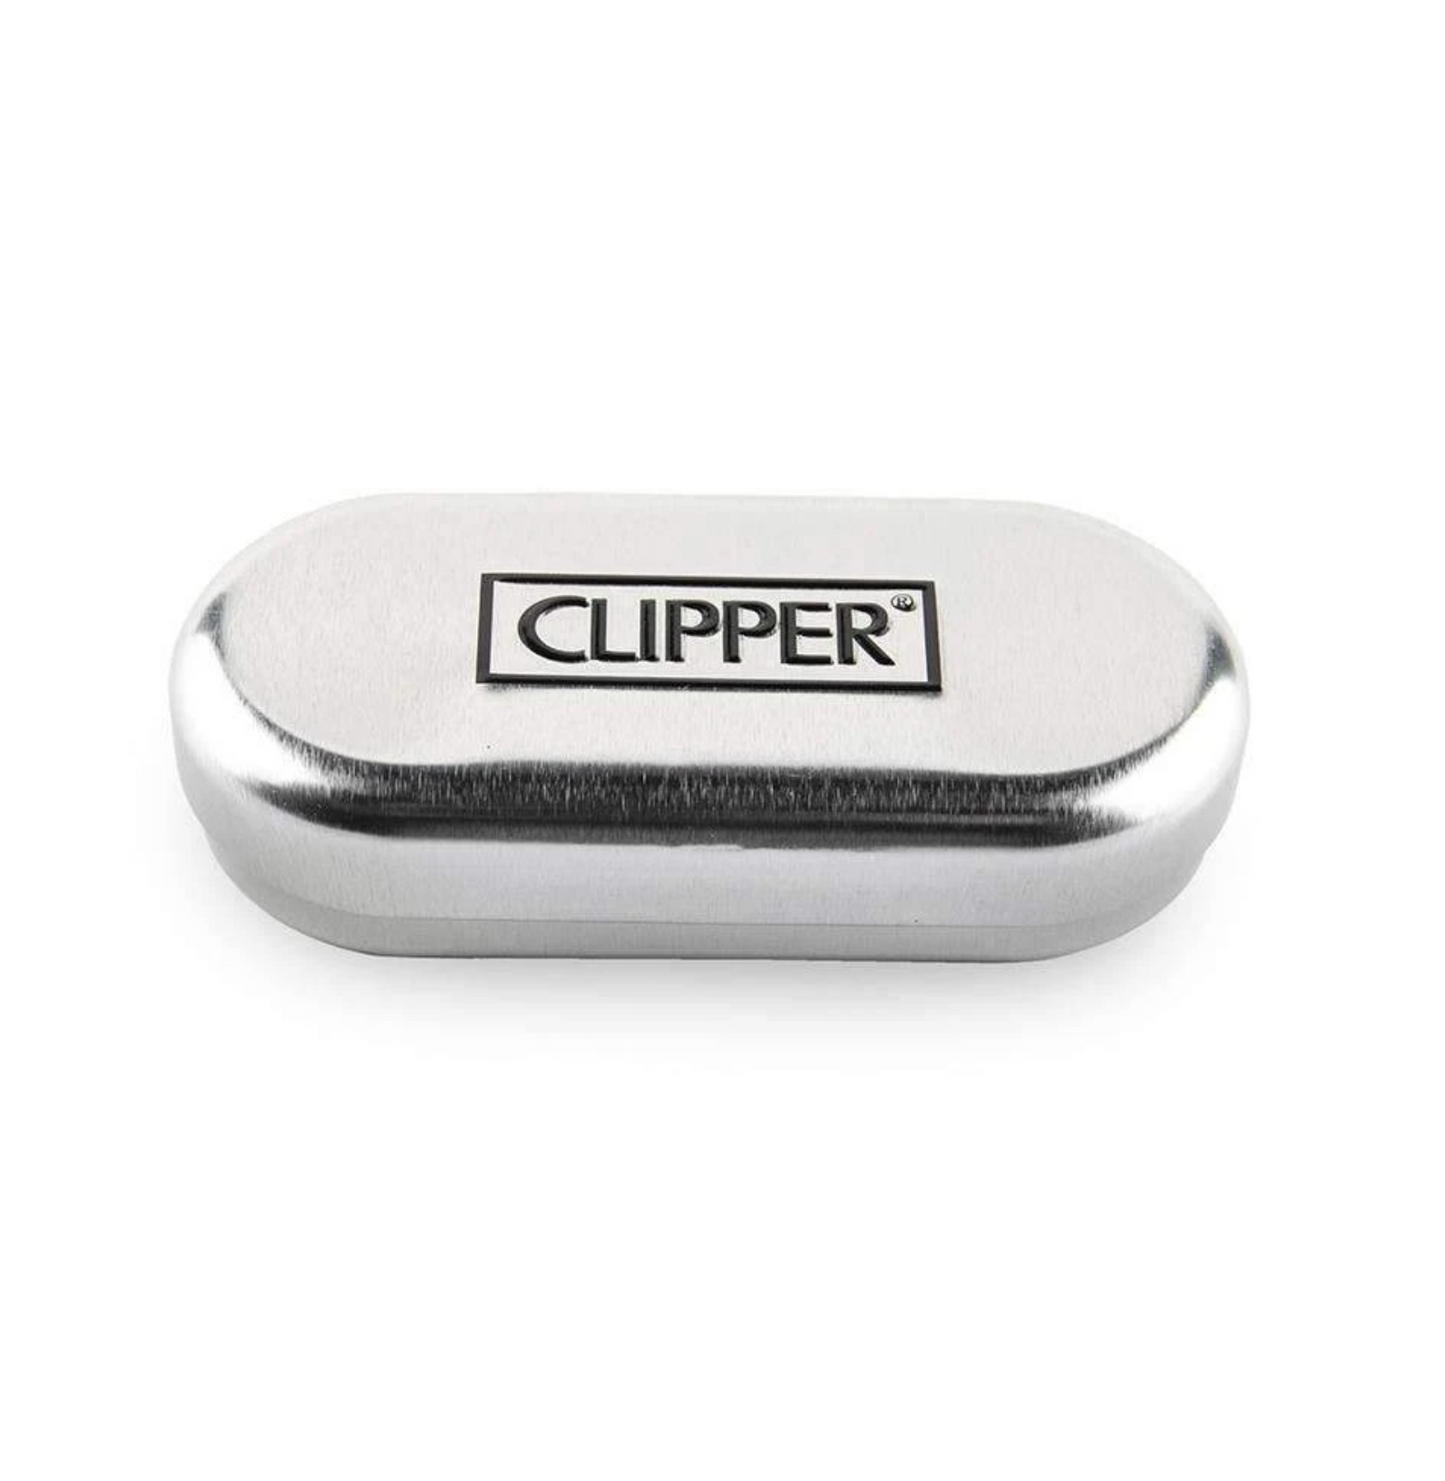 Clipper Full Metal Lighter 12 Counts Display